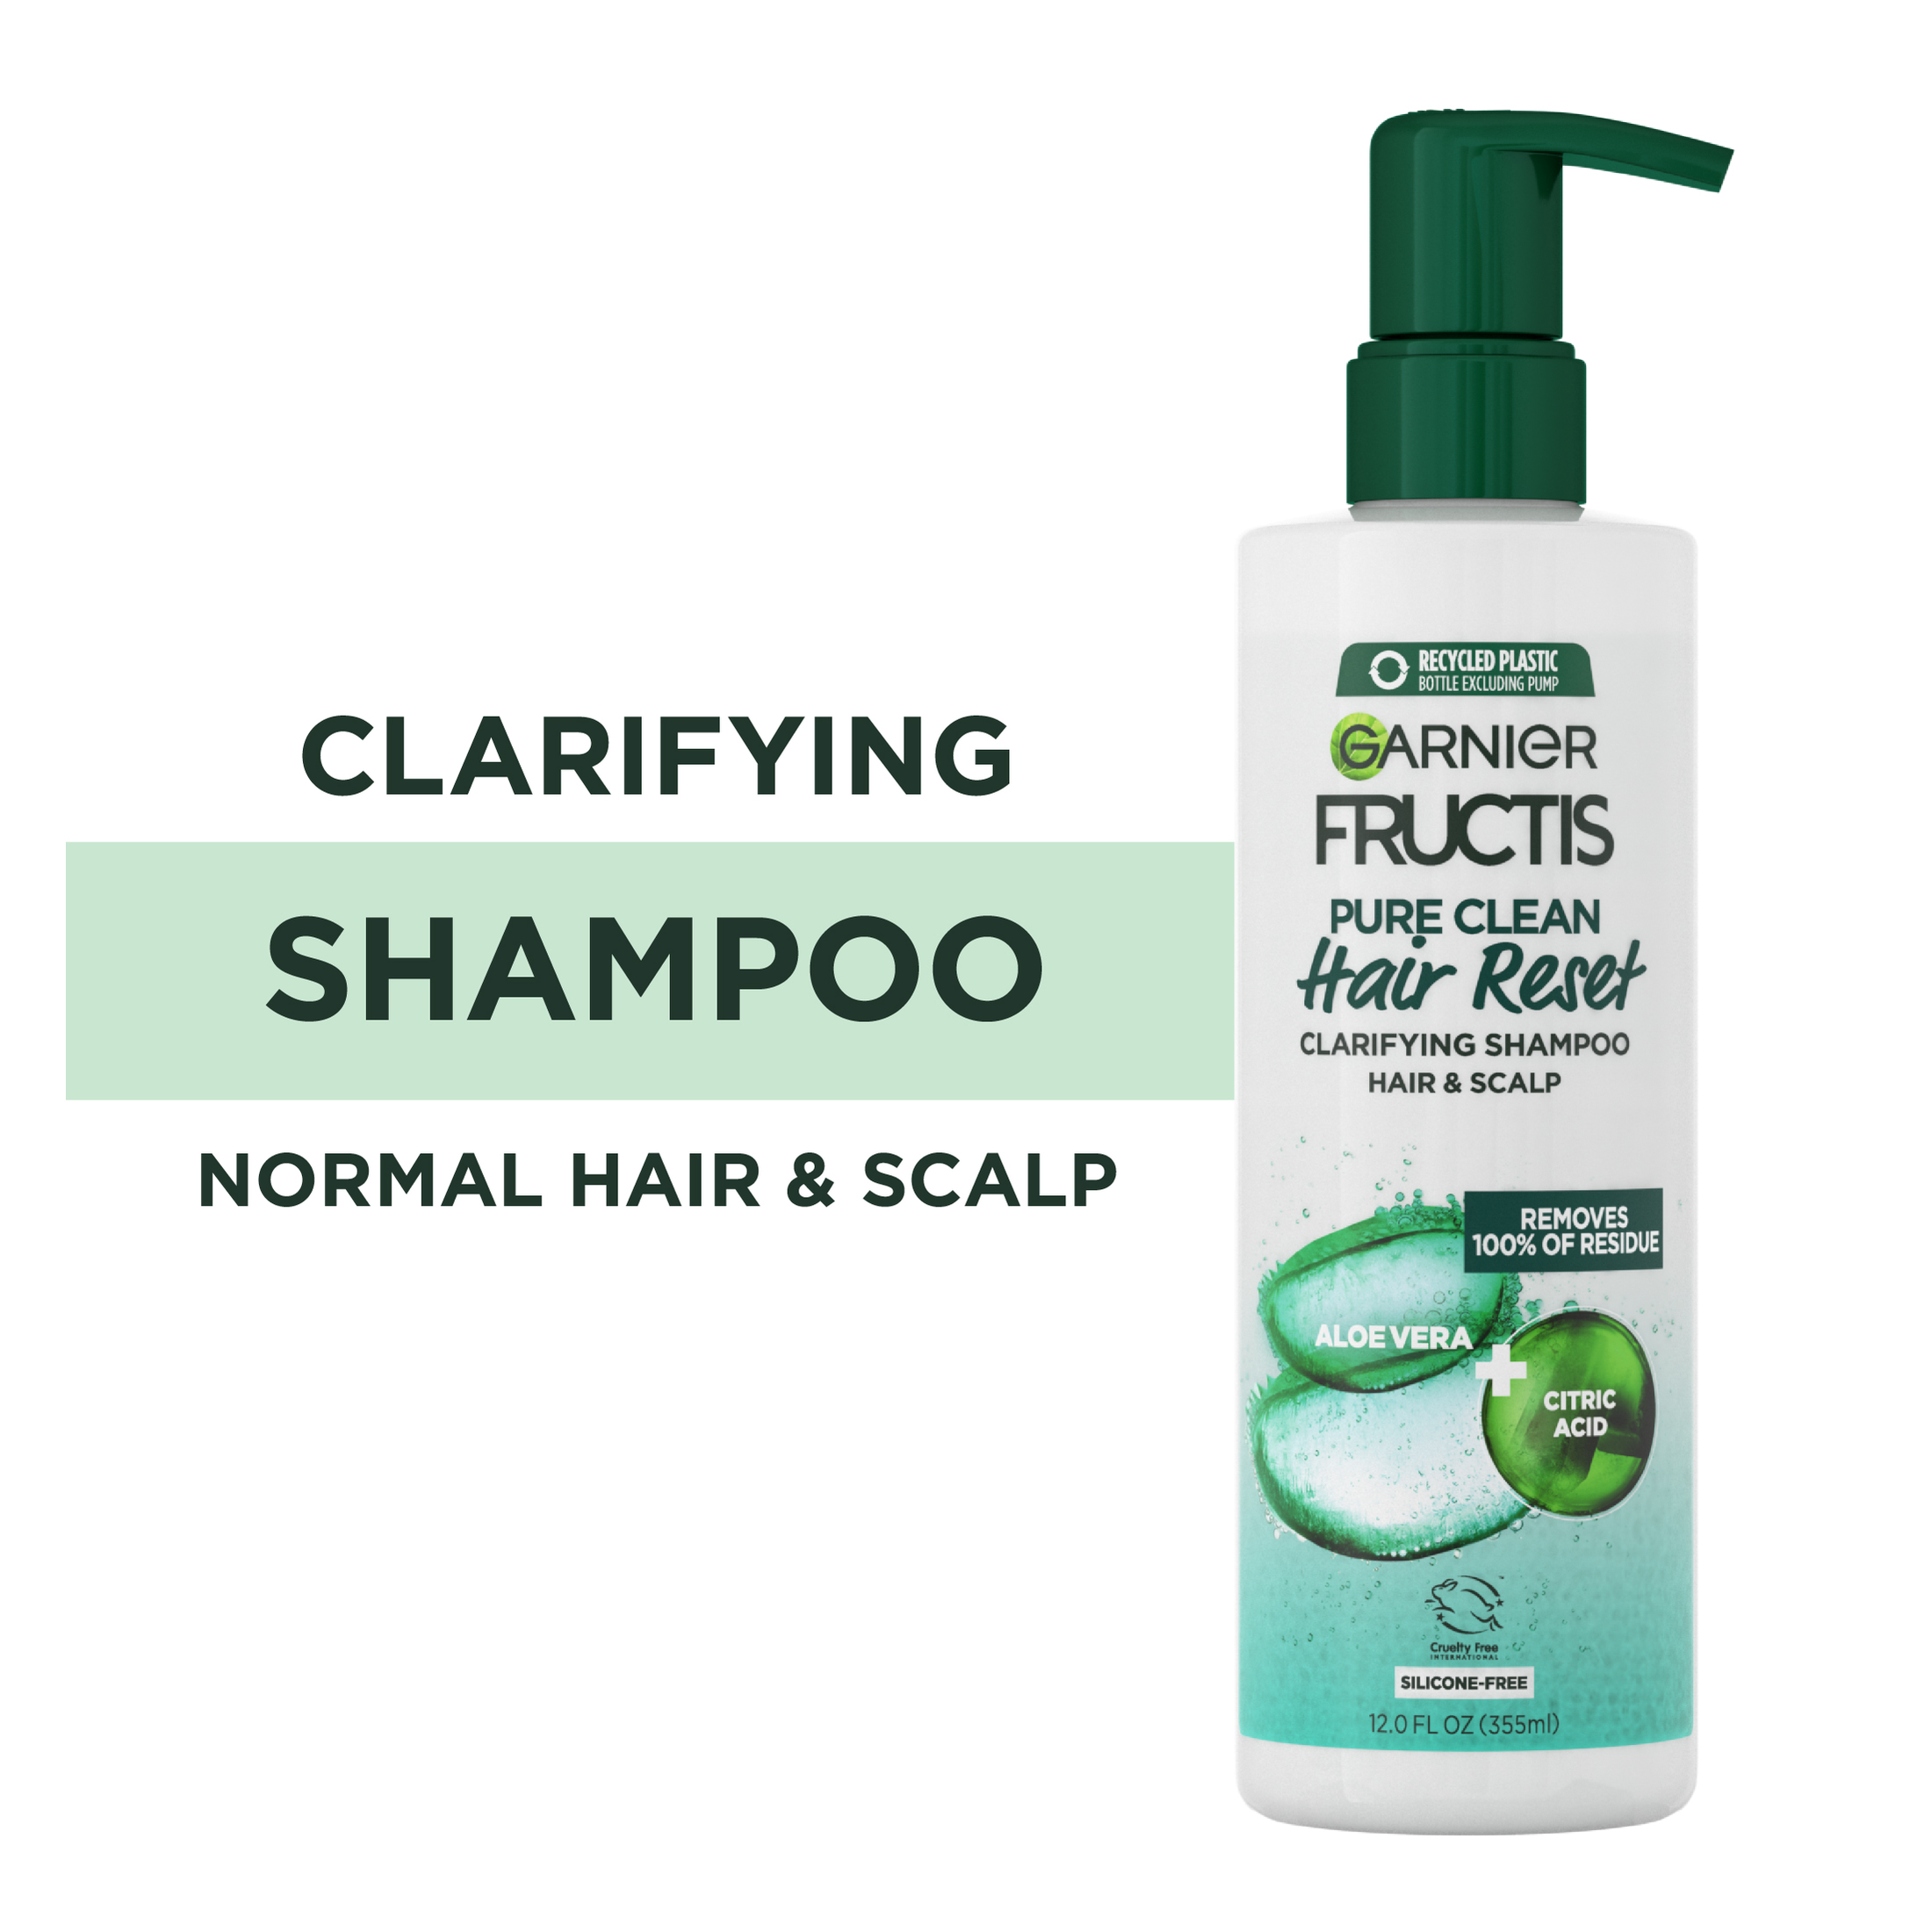 Garnier Fructis Pure Clean Hair Reset Clarifying Shampoo with Aloe Vera, 12 fl oz - image 1 of 7